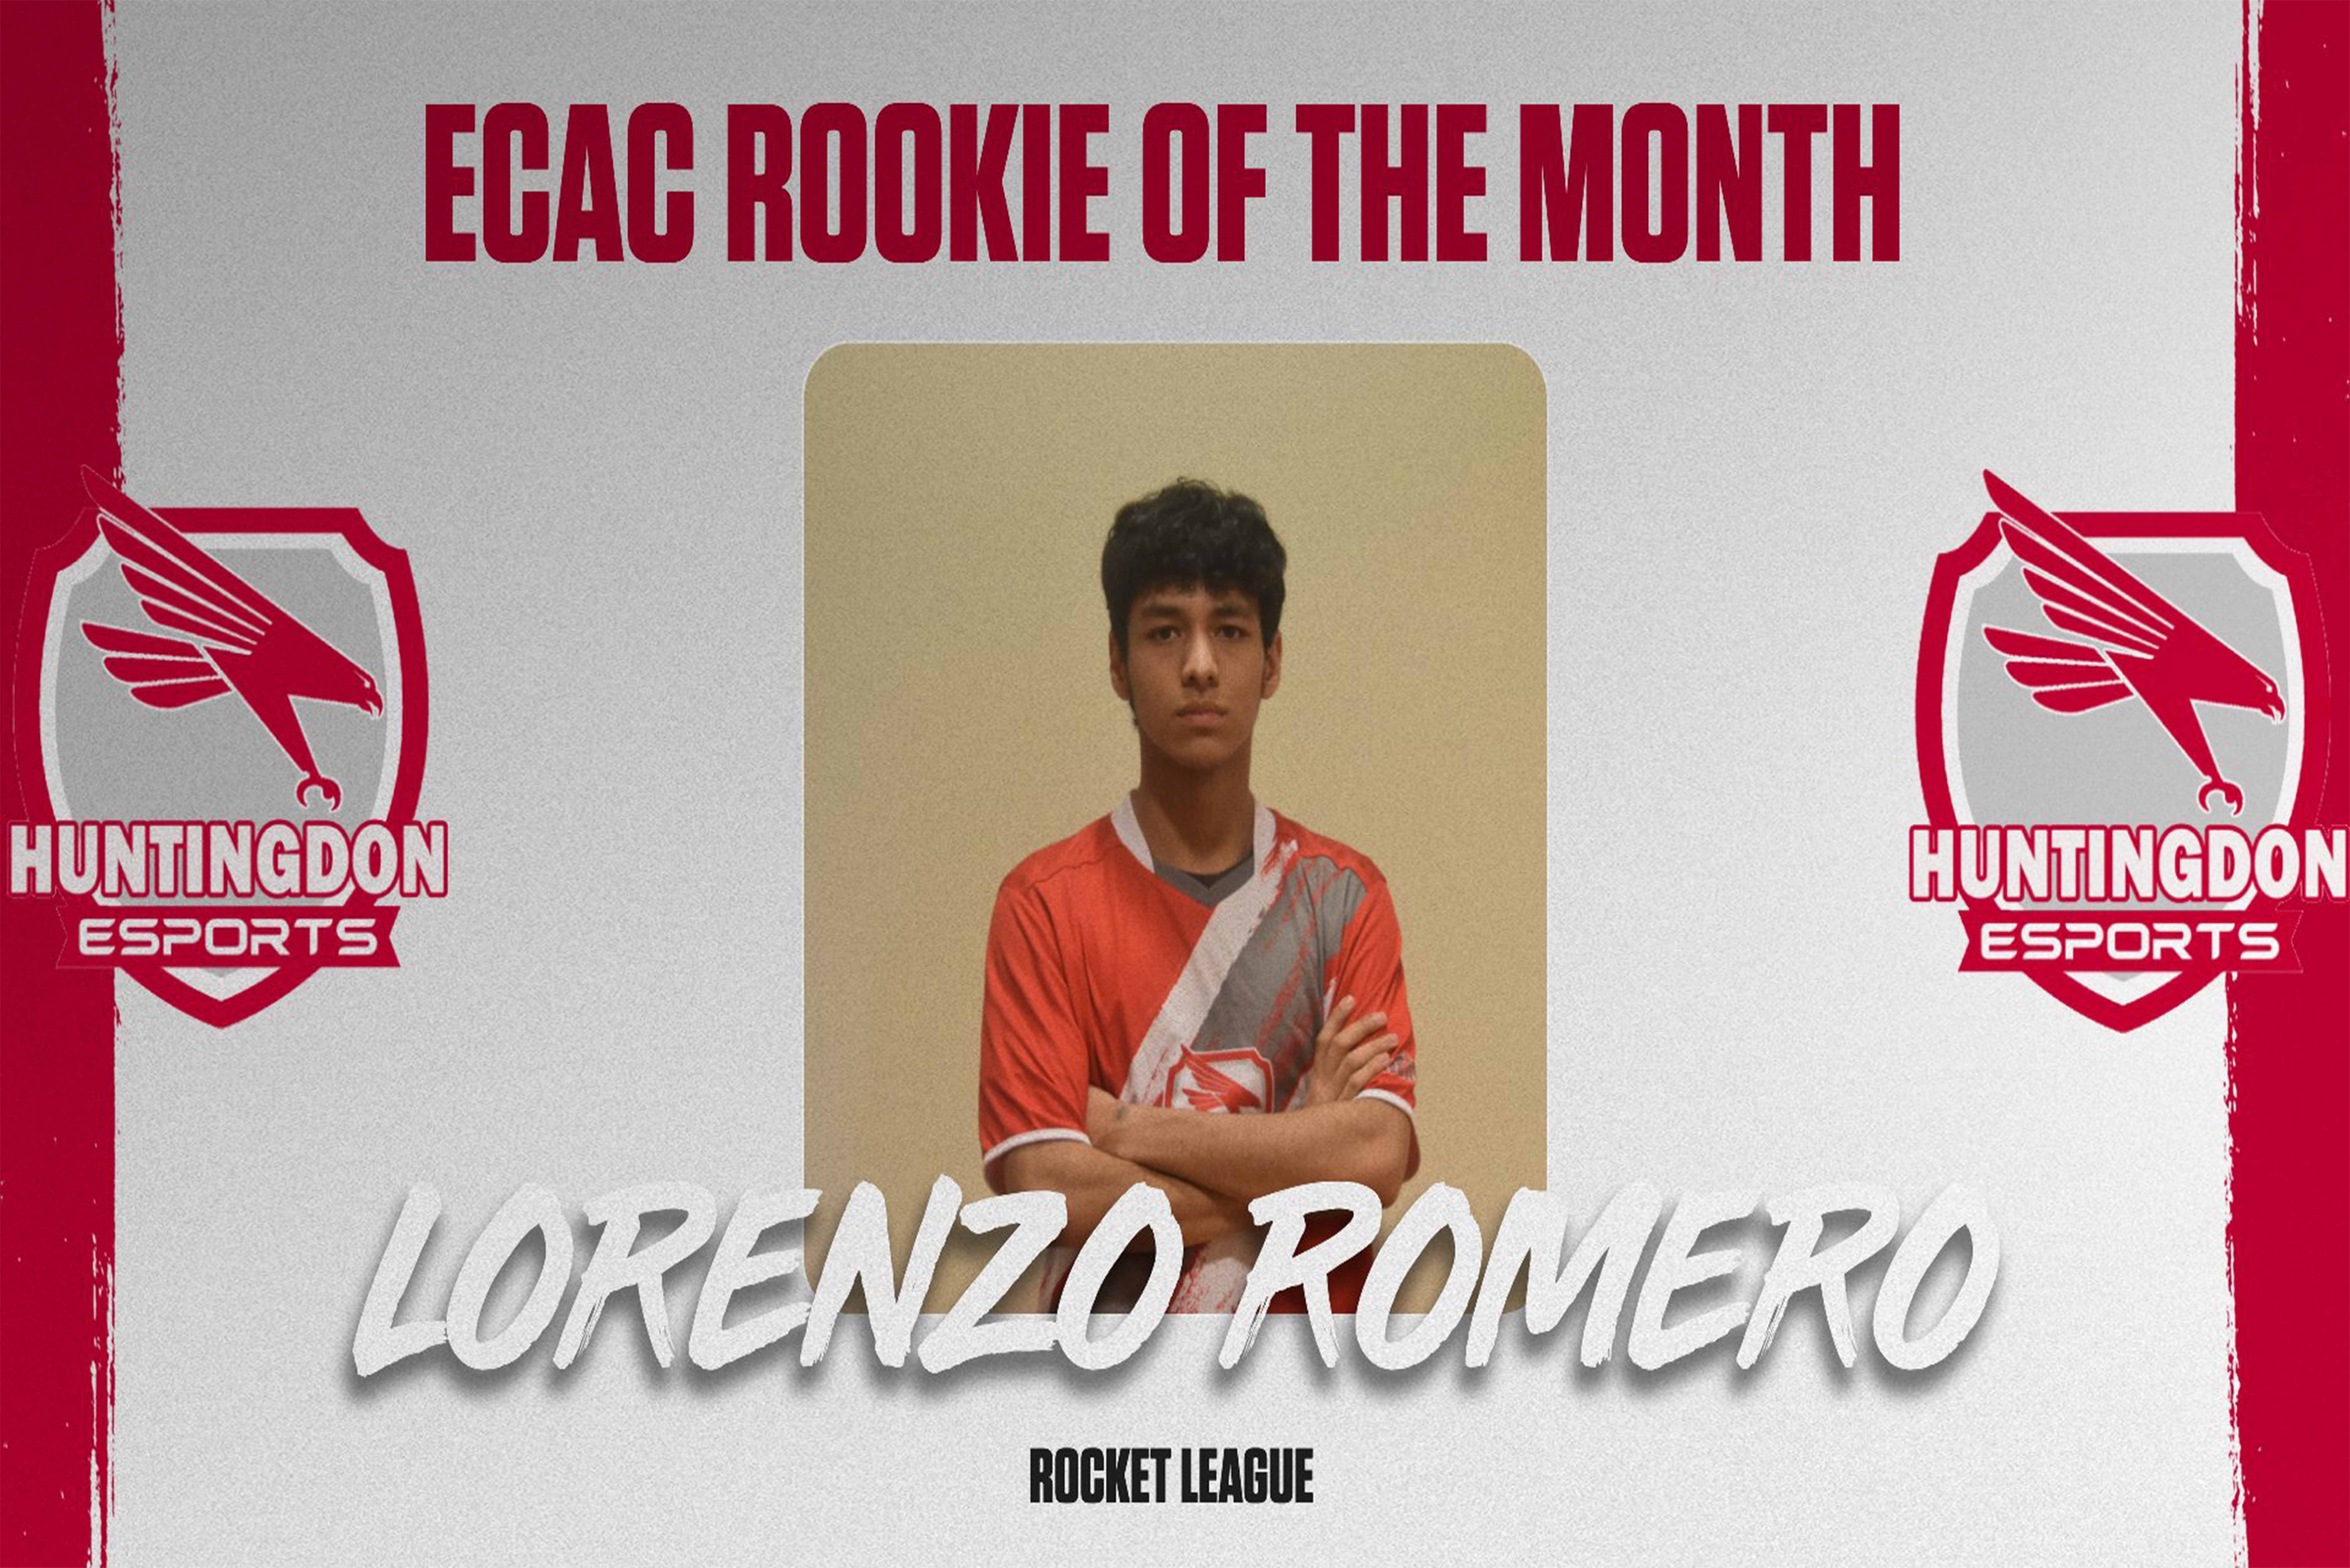 Lorenzo Romero Named ECAC Rocket League Rookie Of The Month